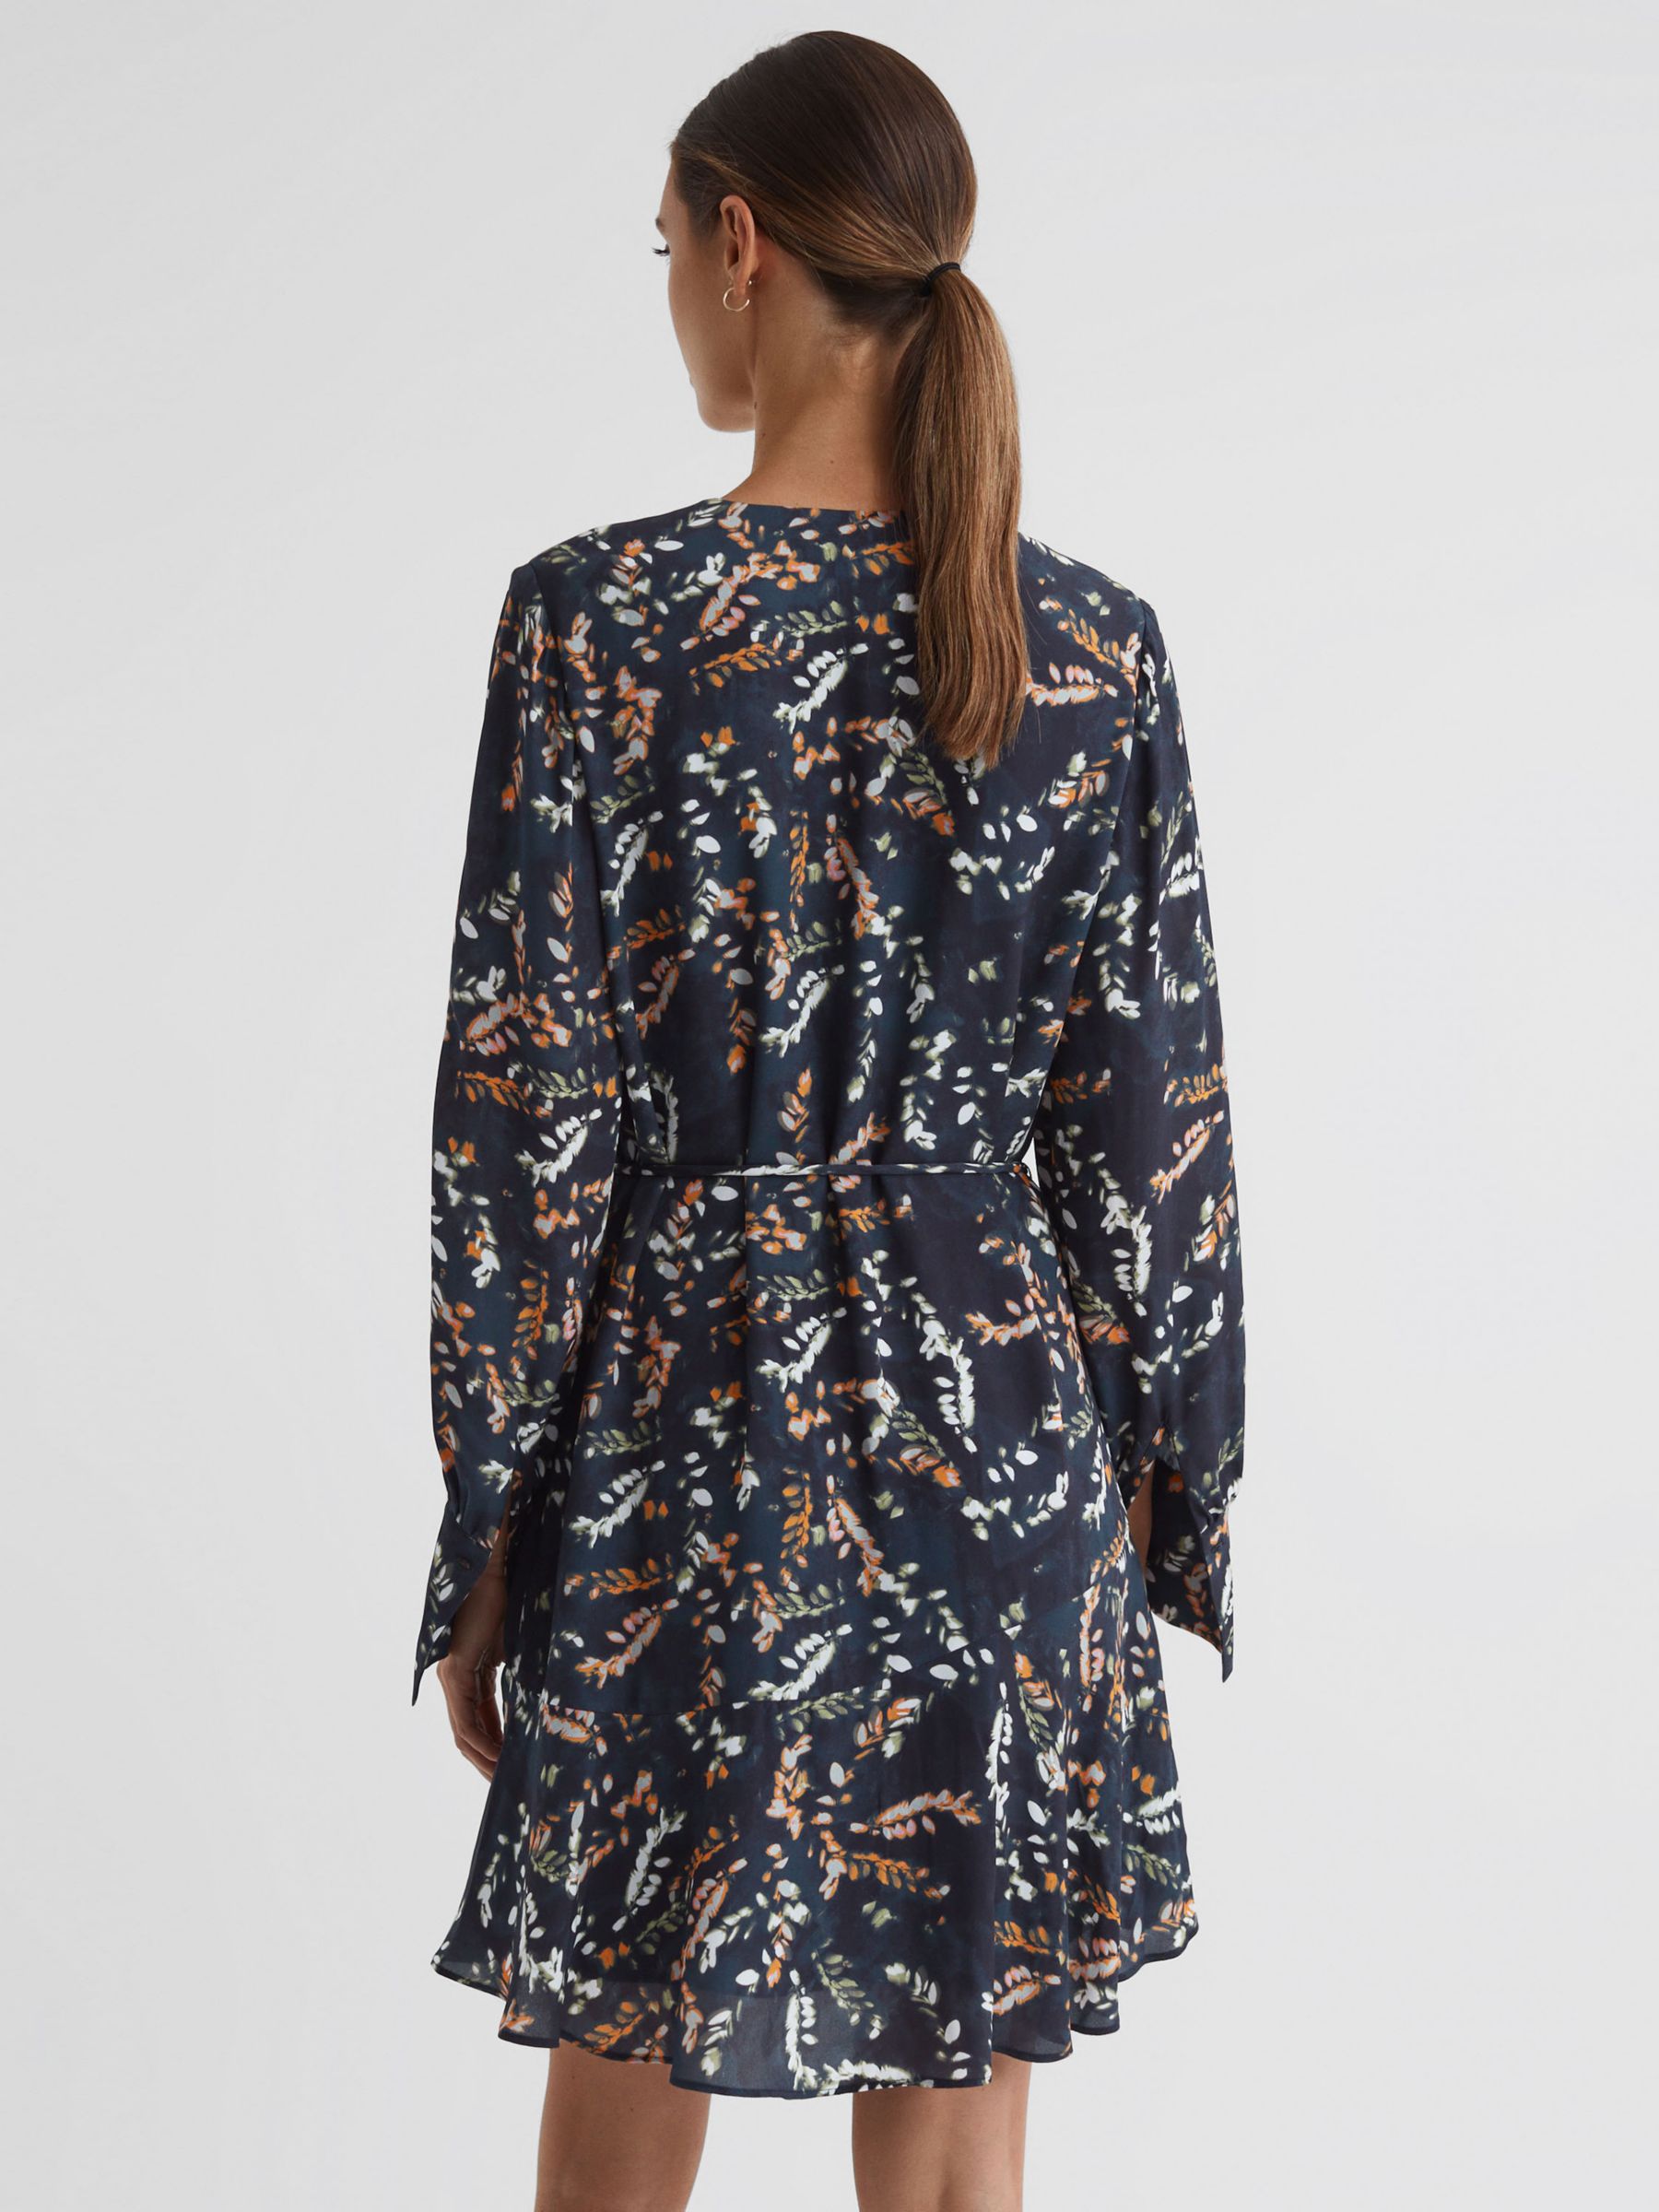 Reiss Hayley Floral Print Mini Dress, Black at John Lewis & Partners